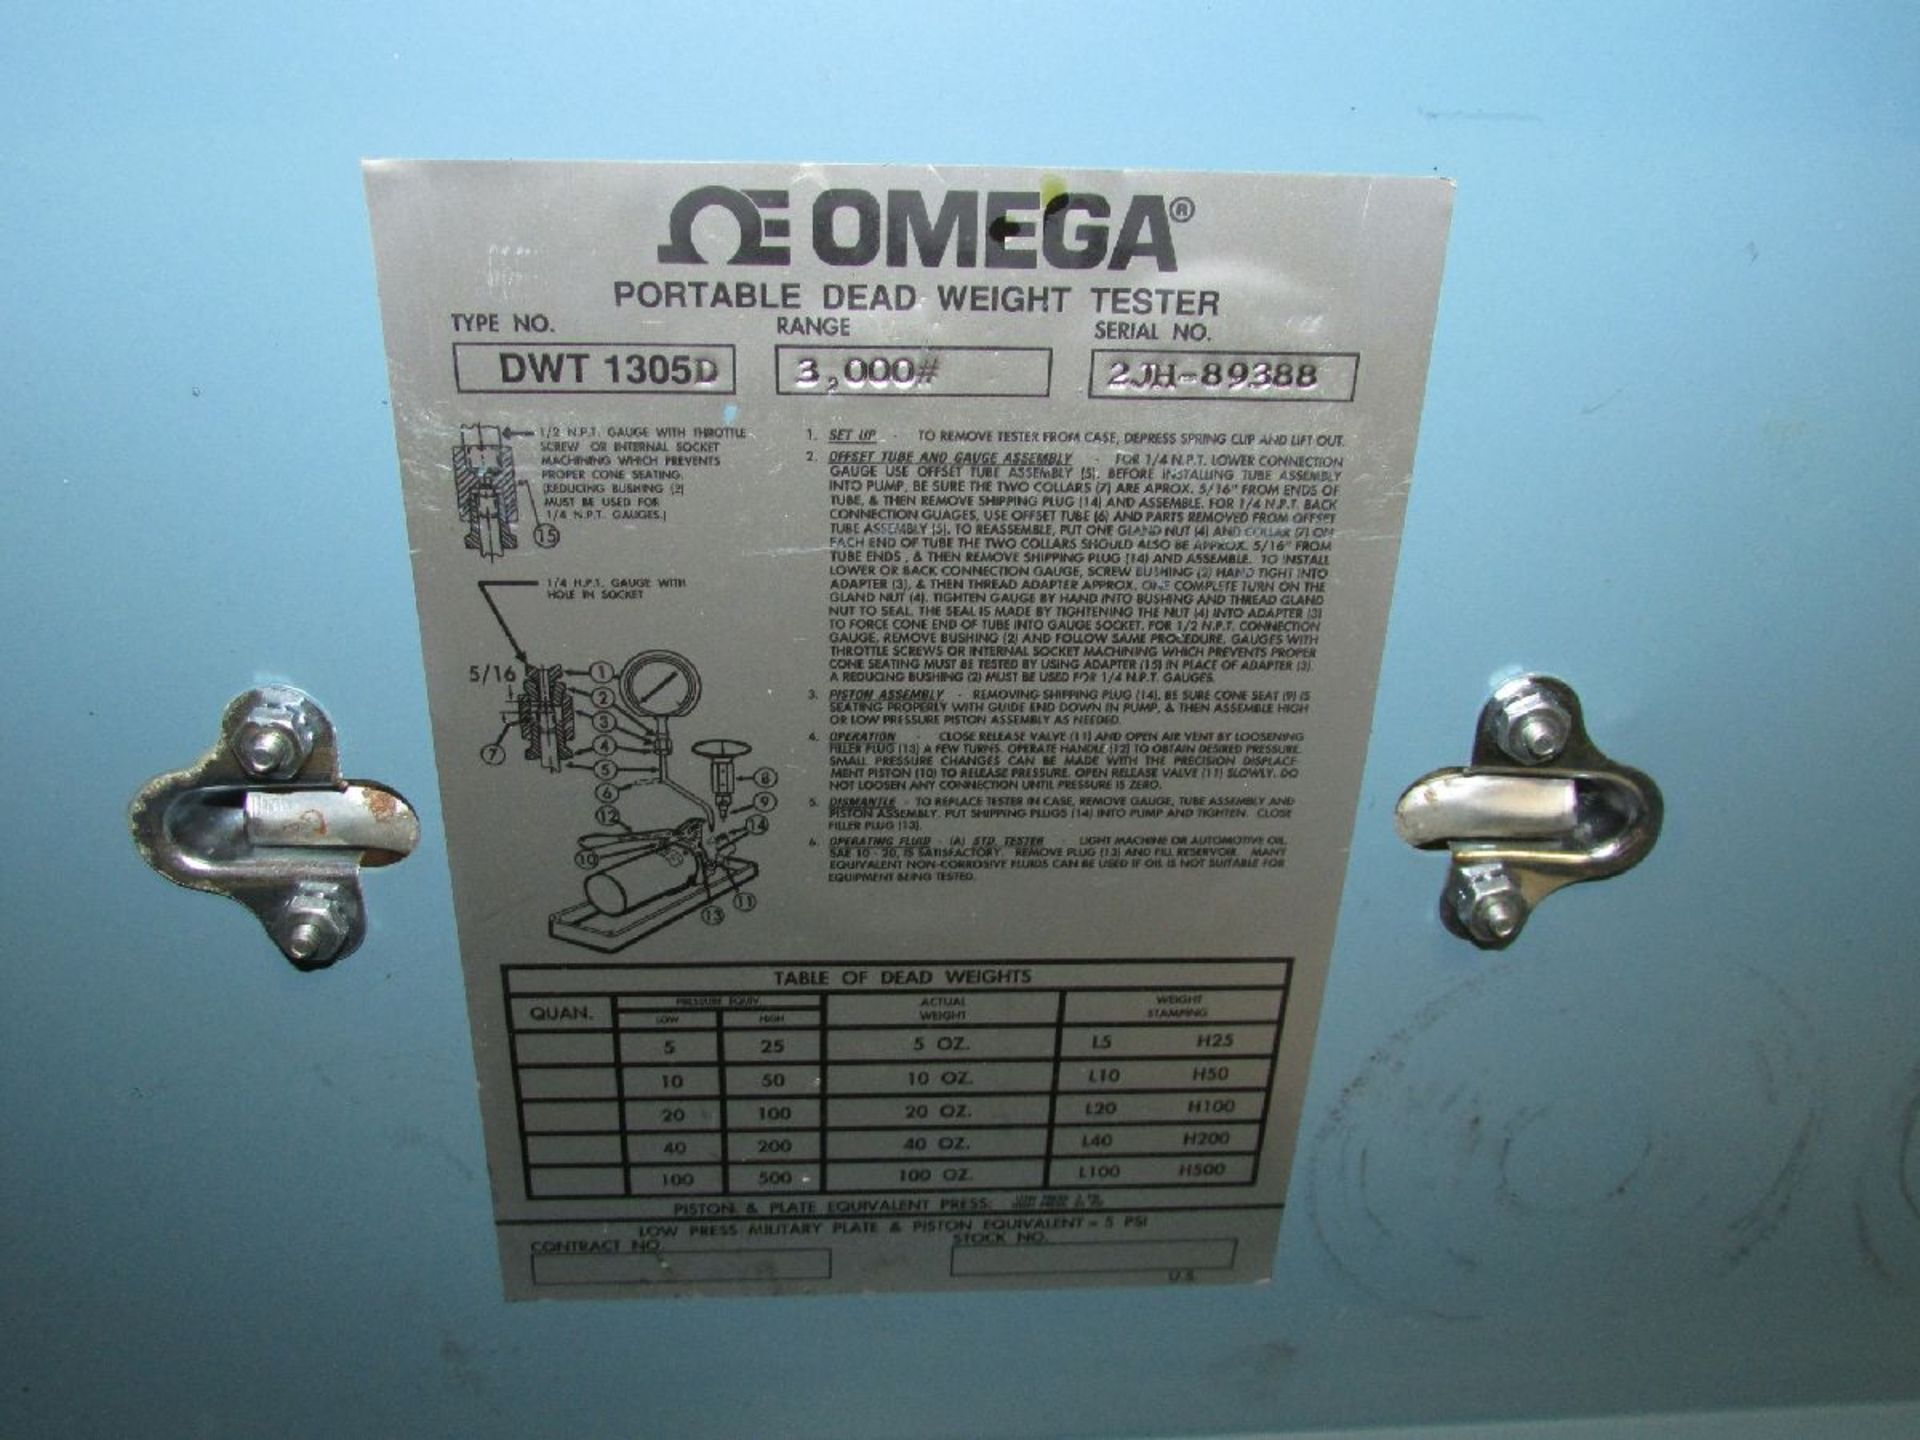 Omega Model DWT 1305D 3,000 Lb. Dead Weight Tester - Image 2 of 3